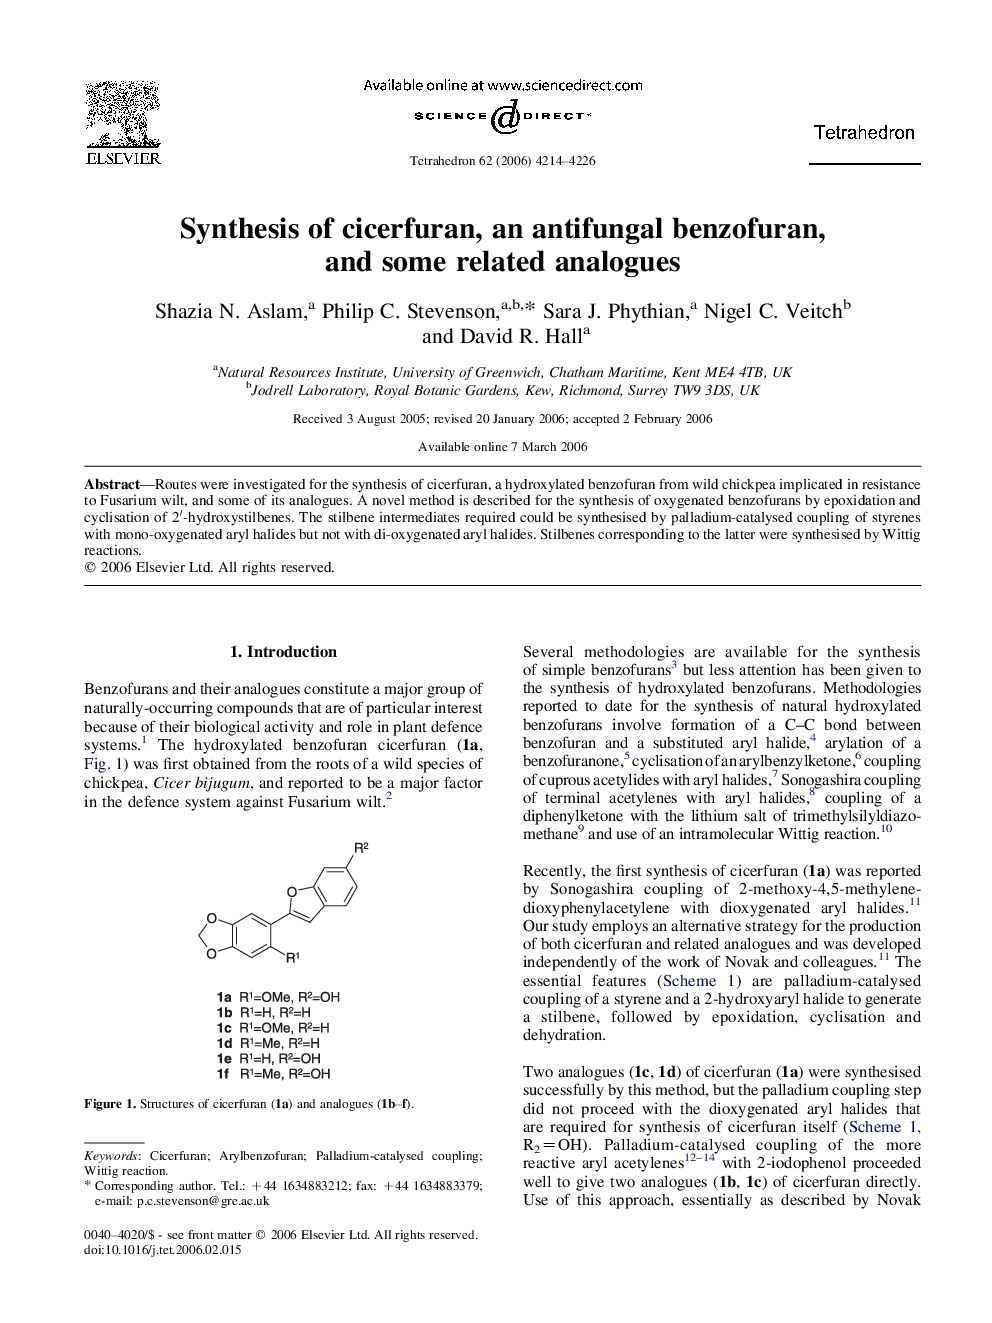 Synthesis of cicerfuran, an antifungal benzofuran, and some related analogues